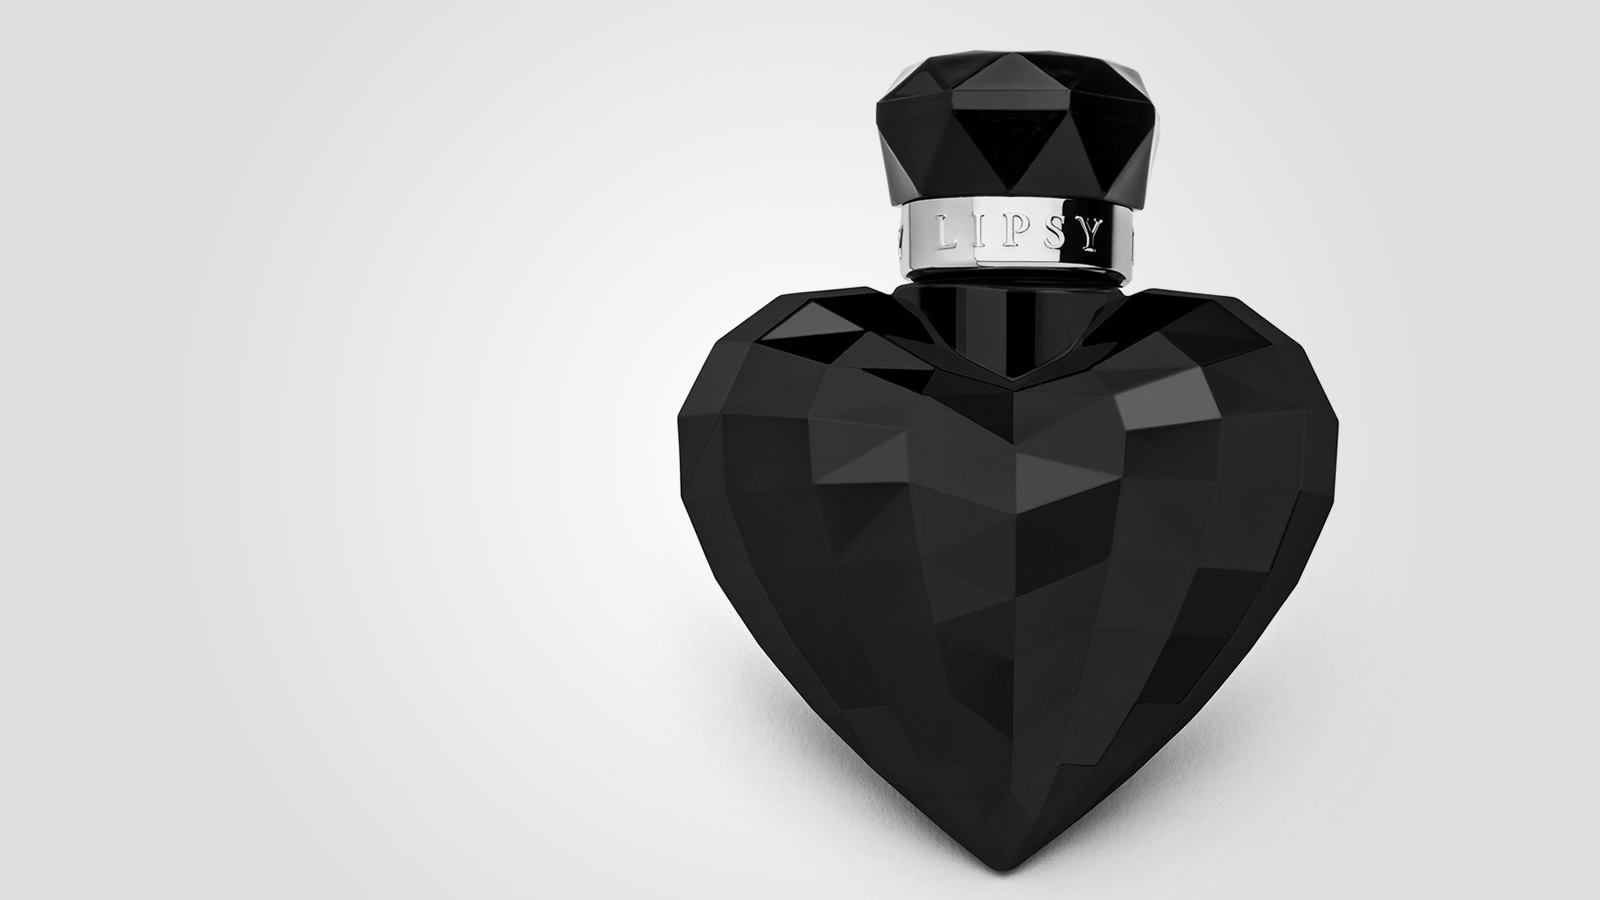 A heart-shaped perfume flacon